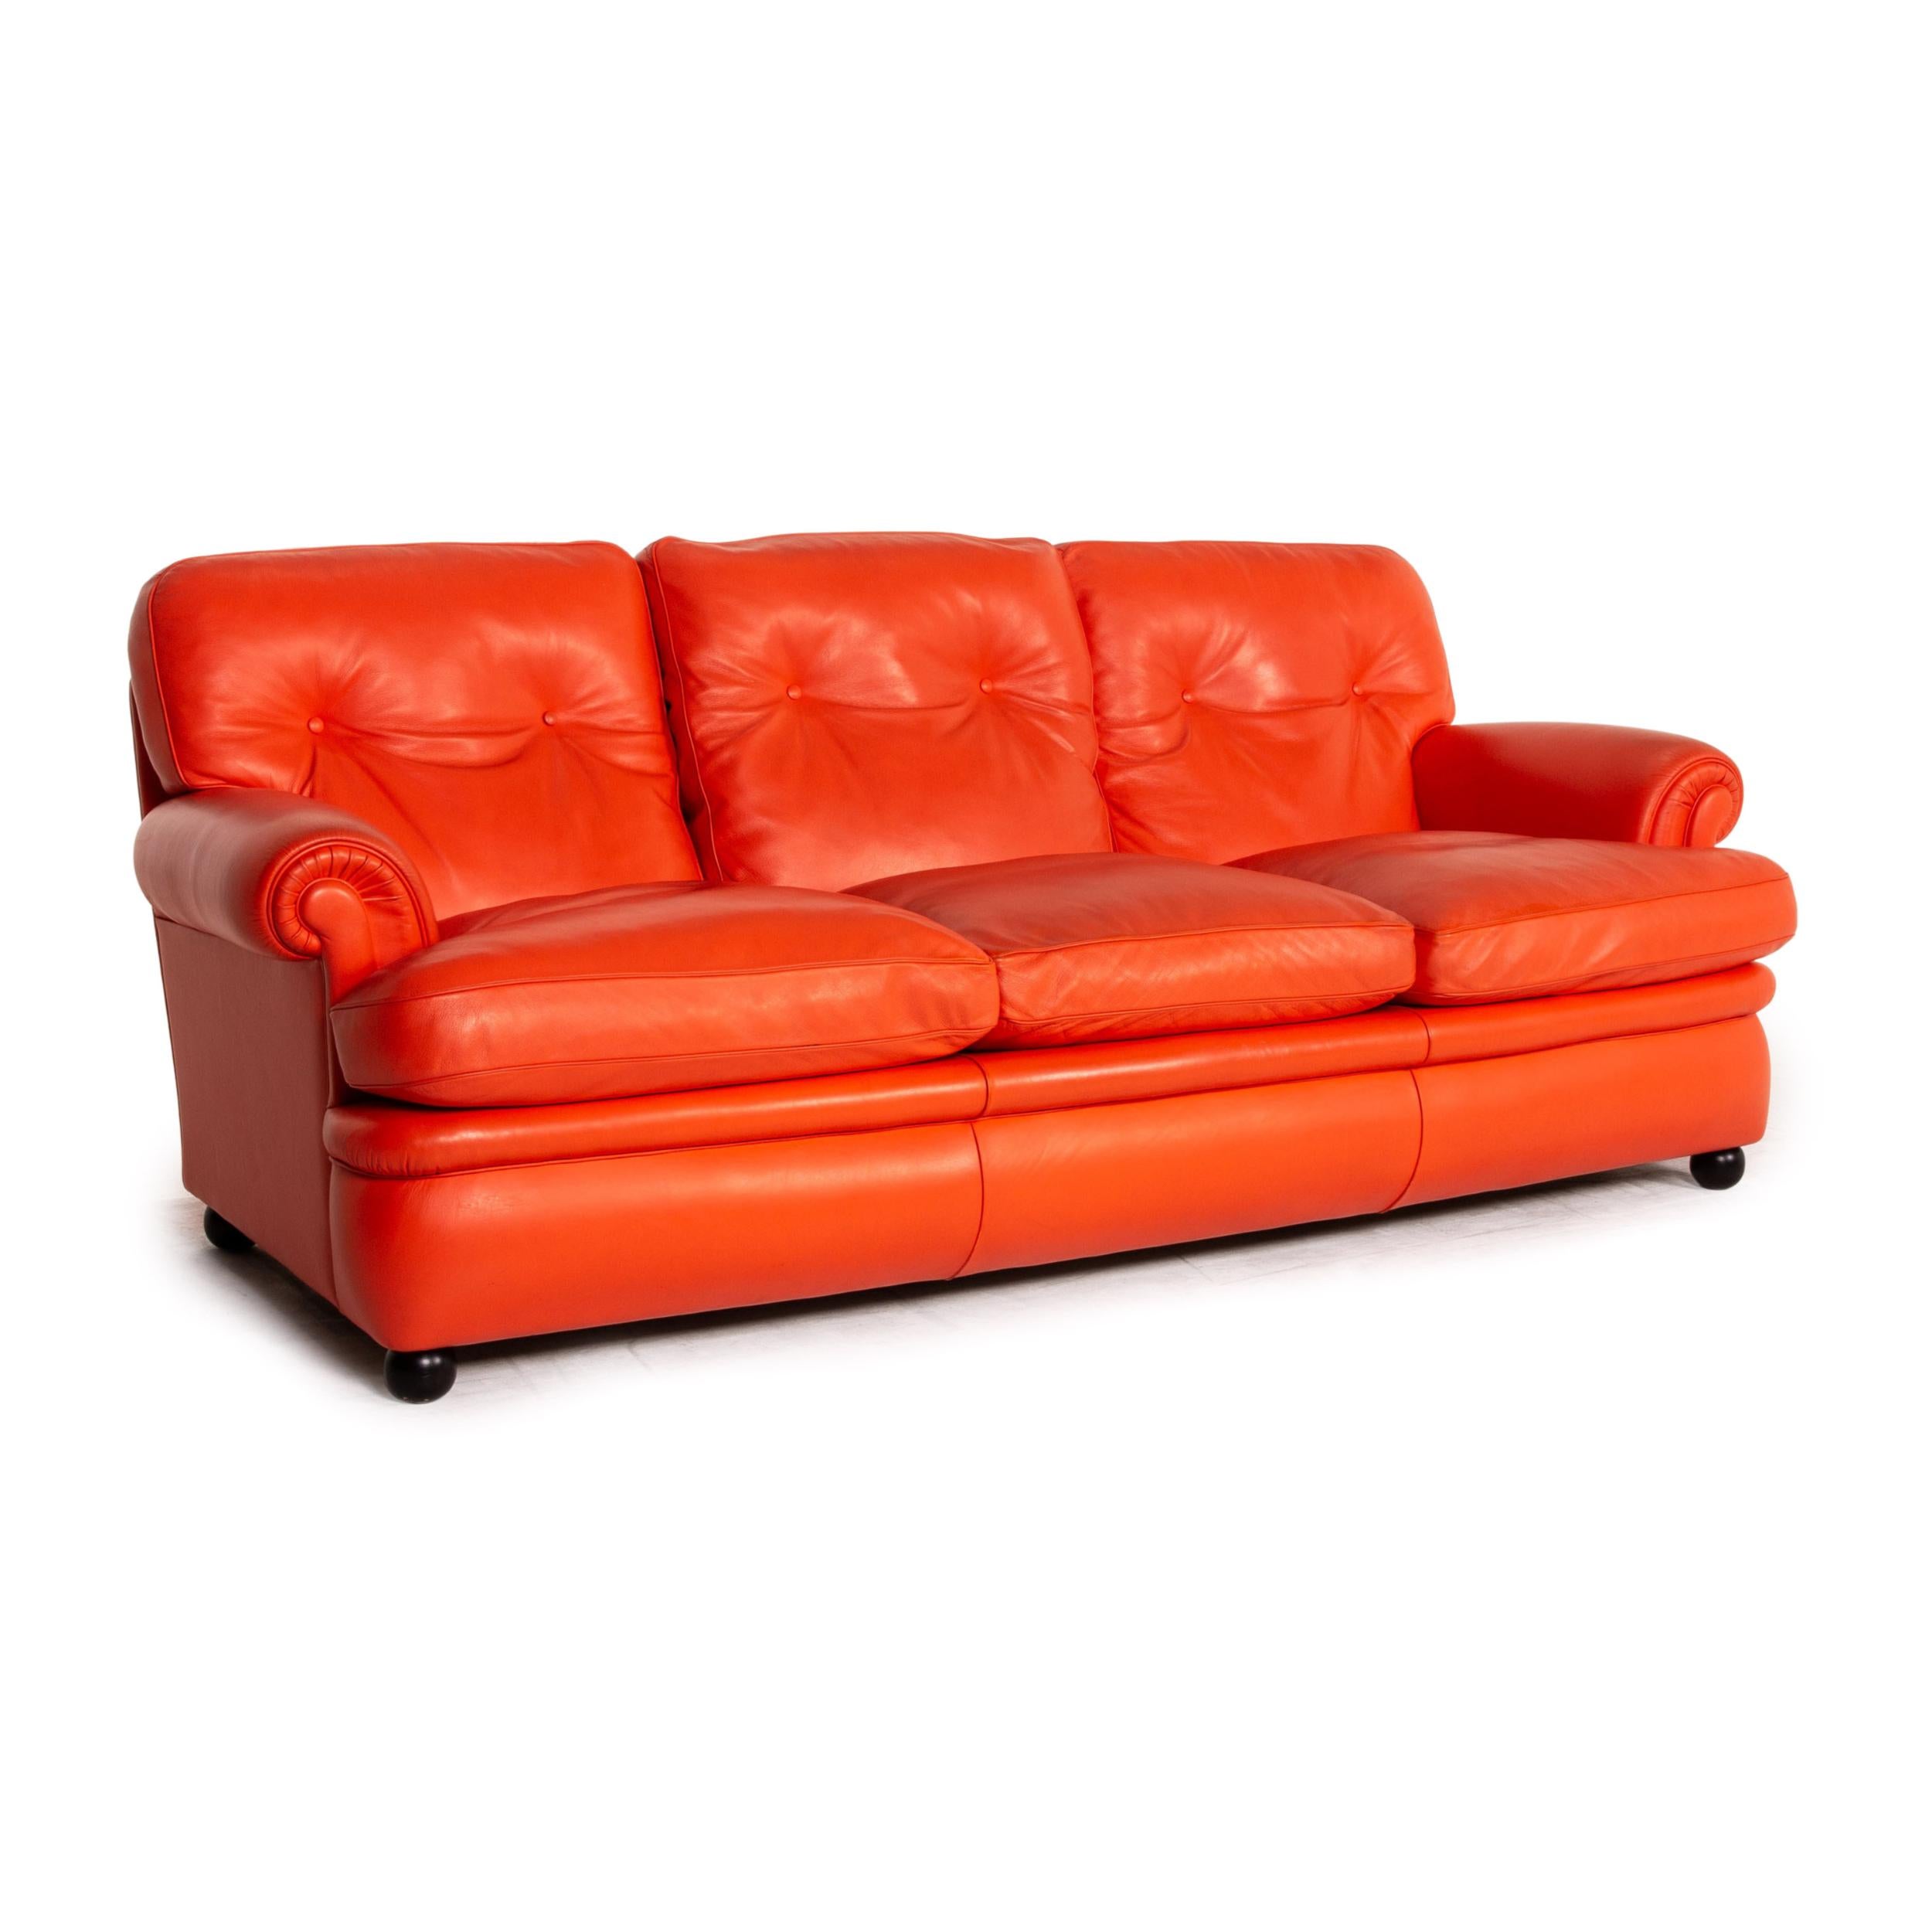 Poltrona Frau Dream on Leather Sofa Coral Orange Chesterfield Sofa Couch 1